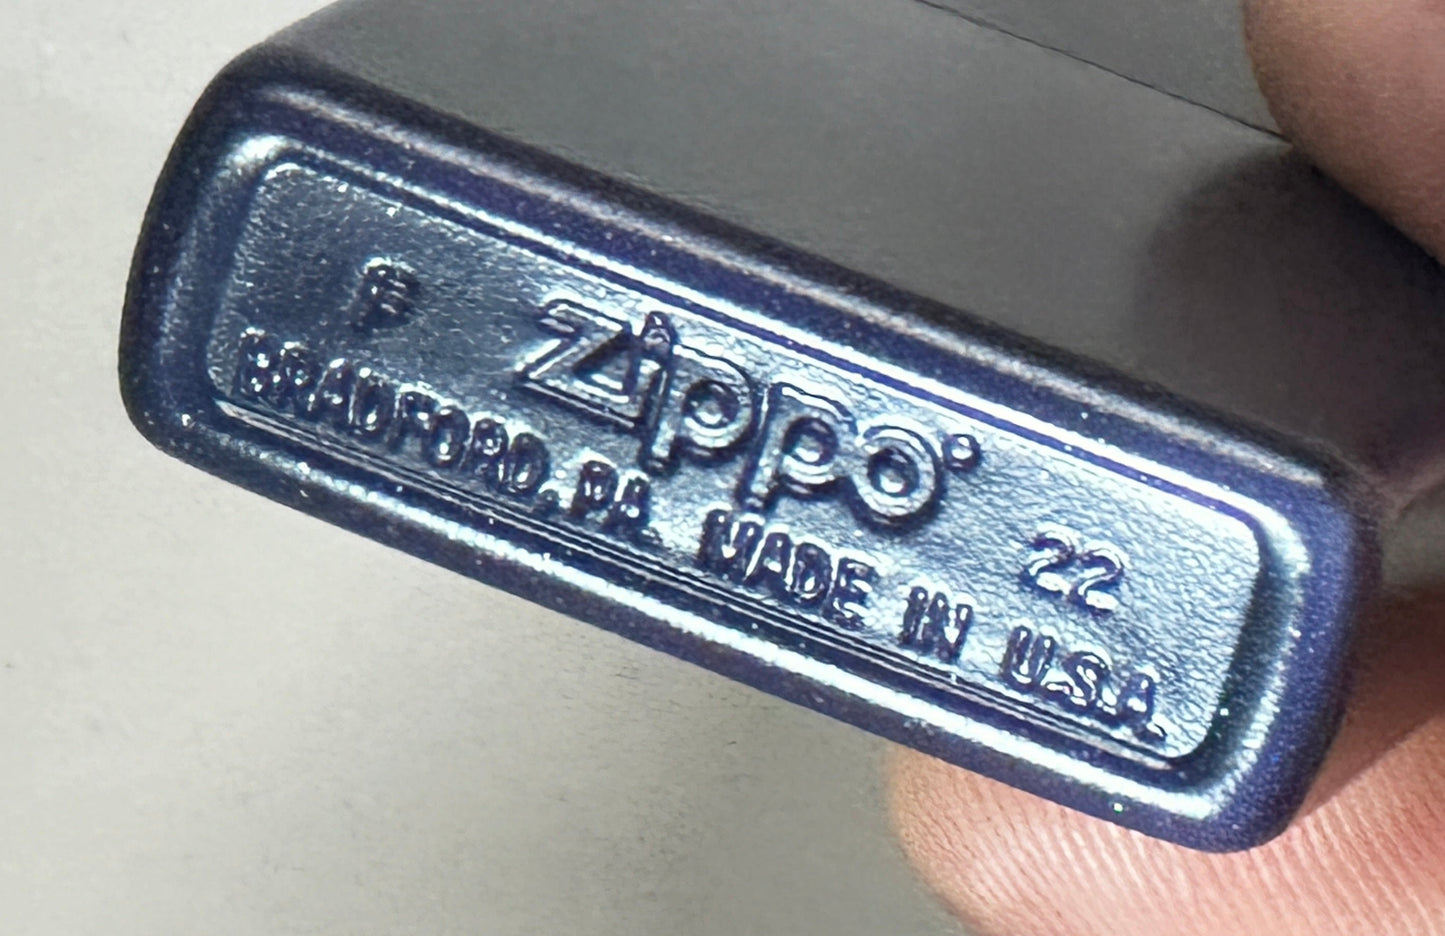 The Ultimate Zippo!